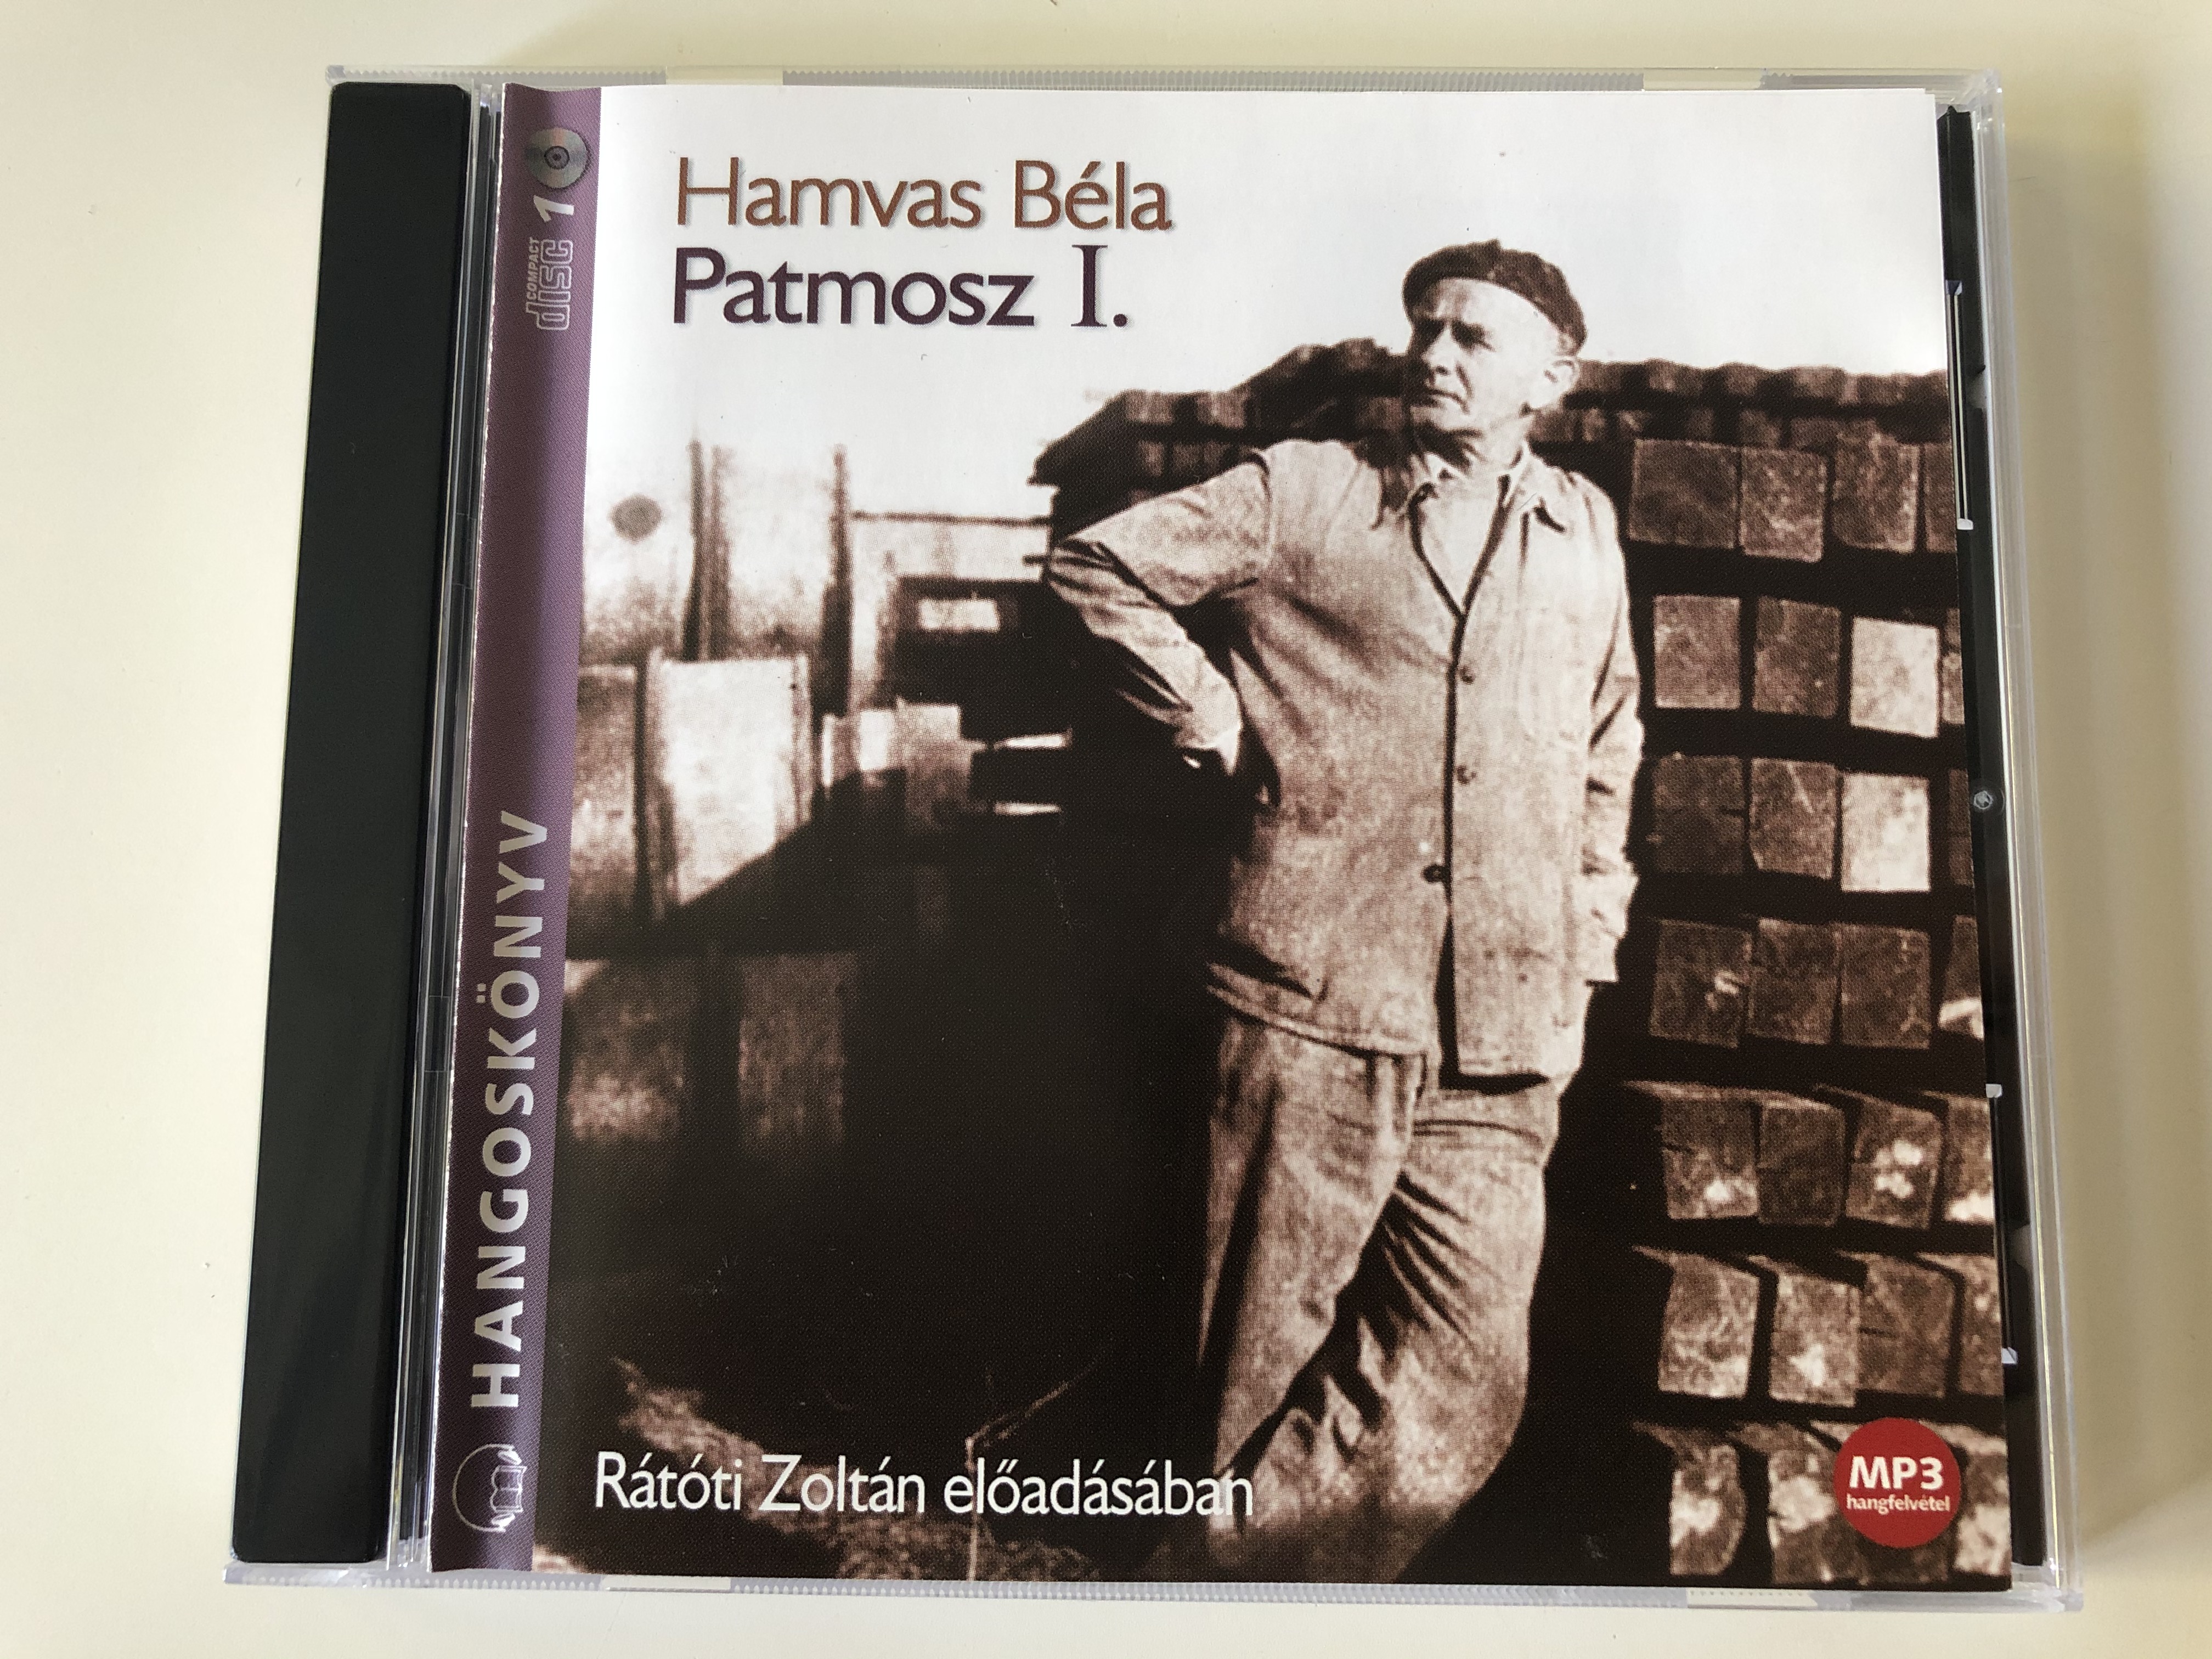 hamvas-b-la-patmosz-i.-ratoti-zoltan-eloadasaban-kossuth-audio-cd-2990-ft-1-.jpg